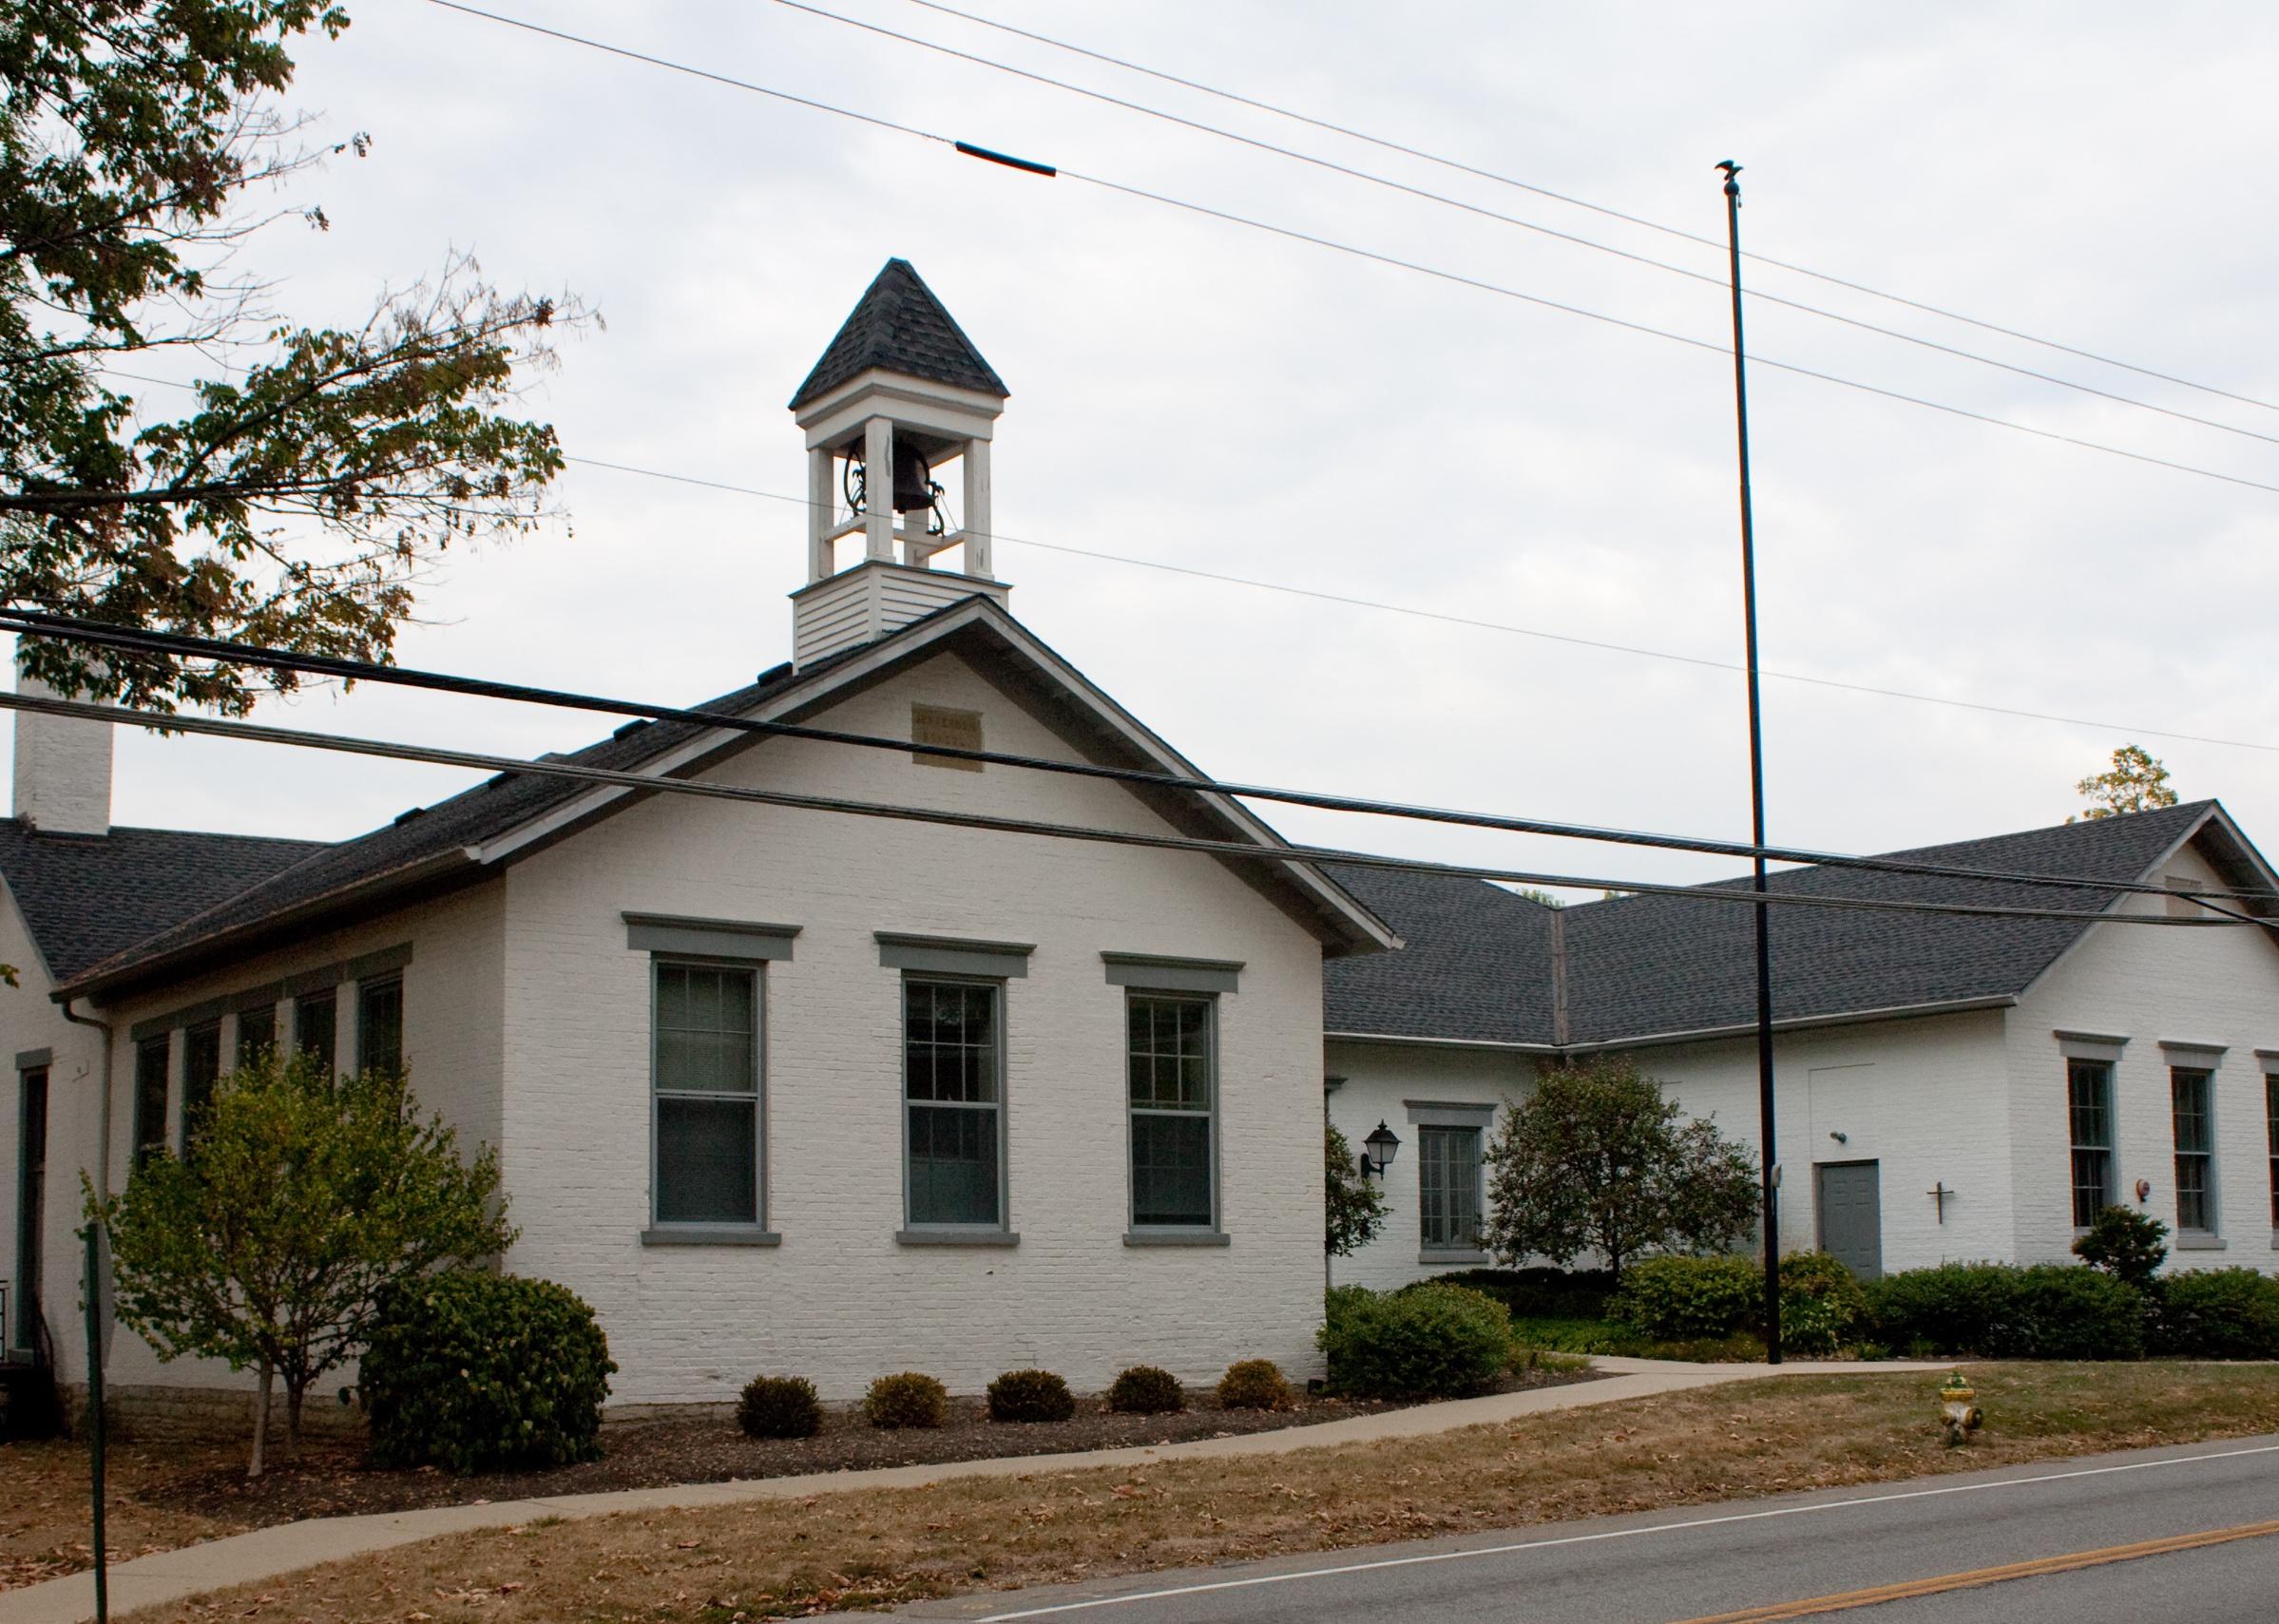 Jefferson Schoolhouse in Indian Hill.